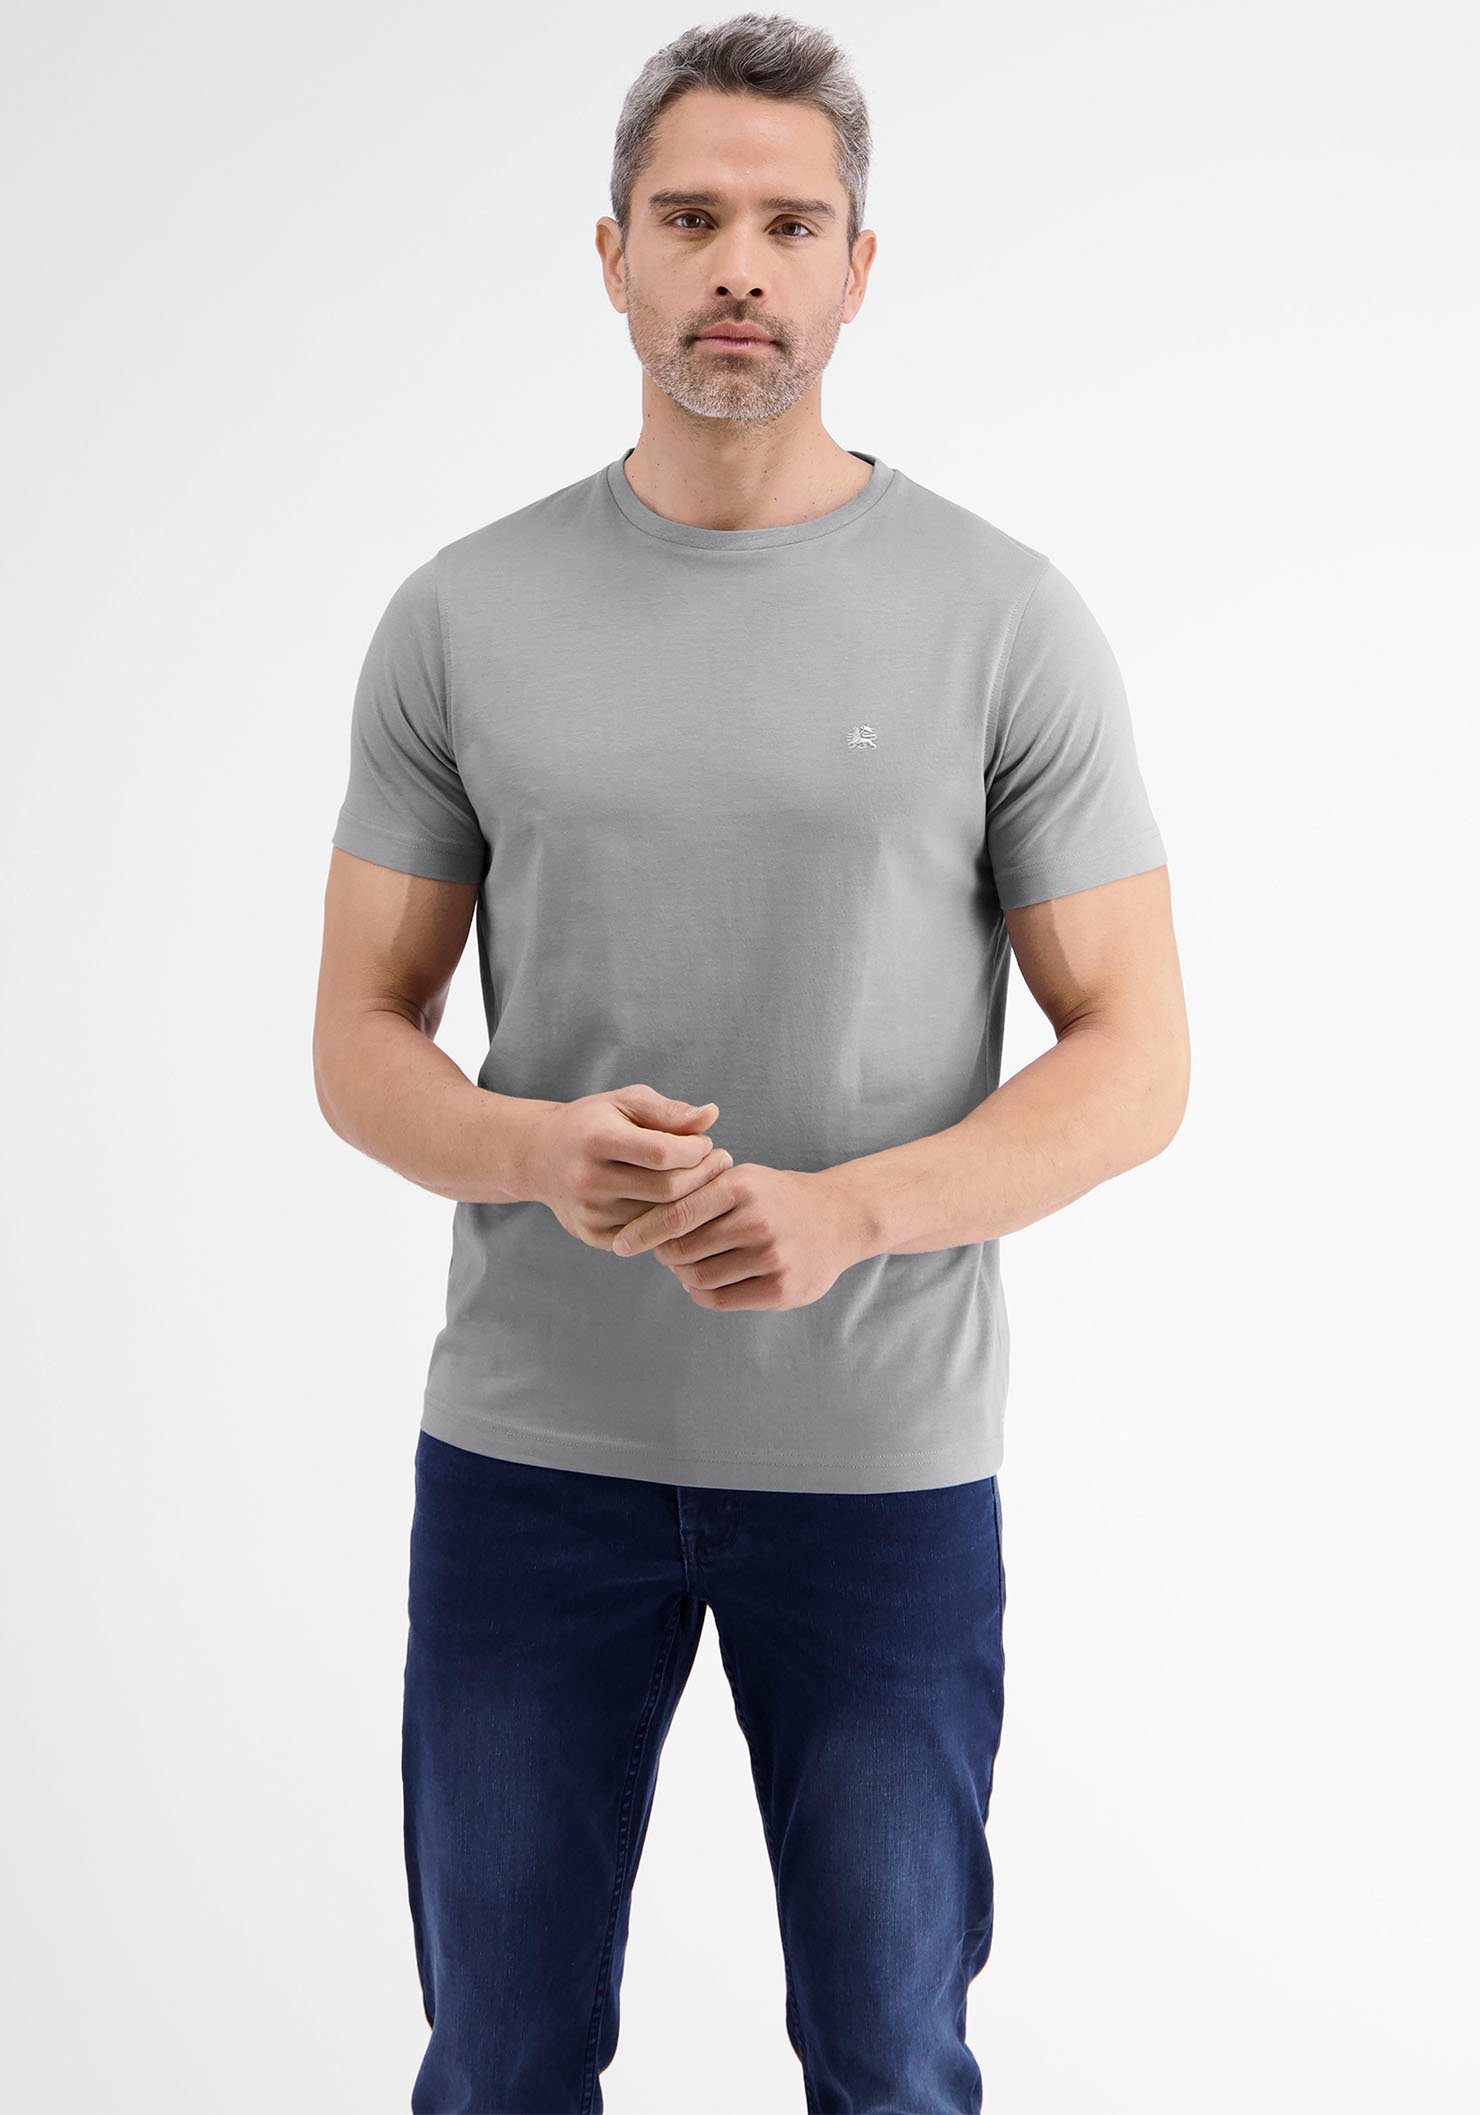 grey Basic-Look im platinum LERROS T-Shirt